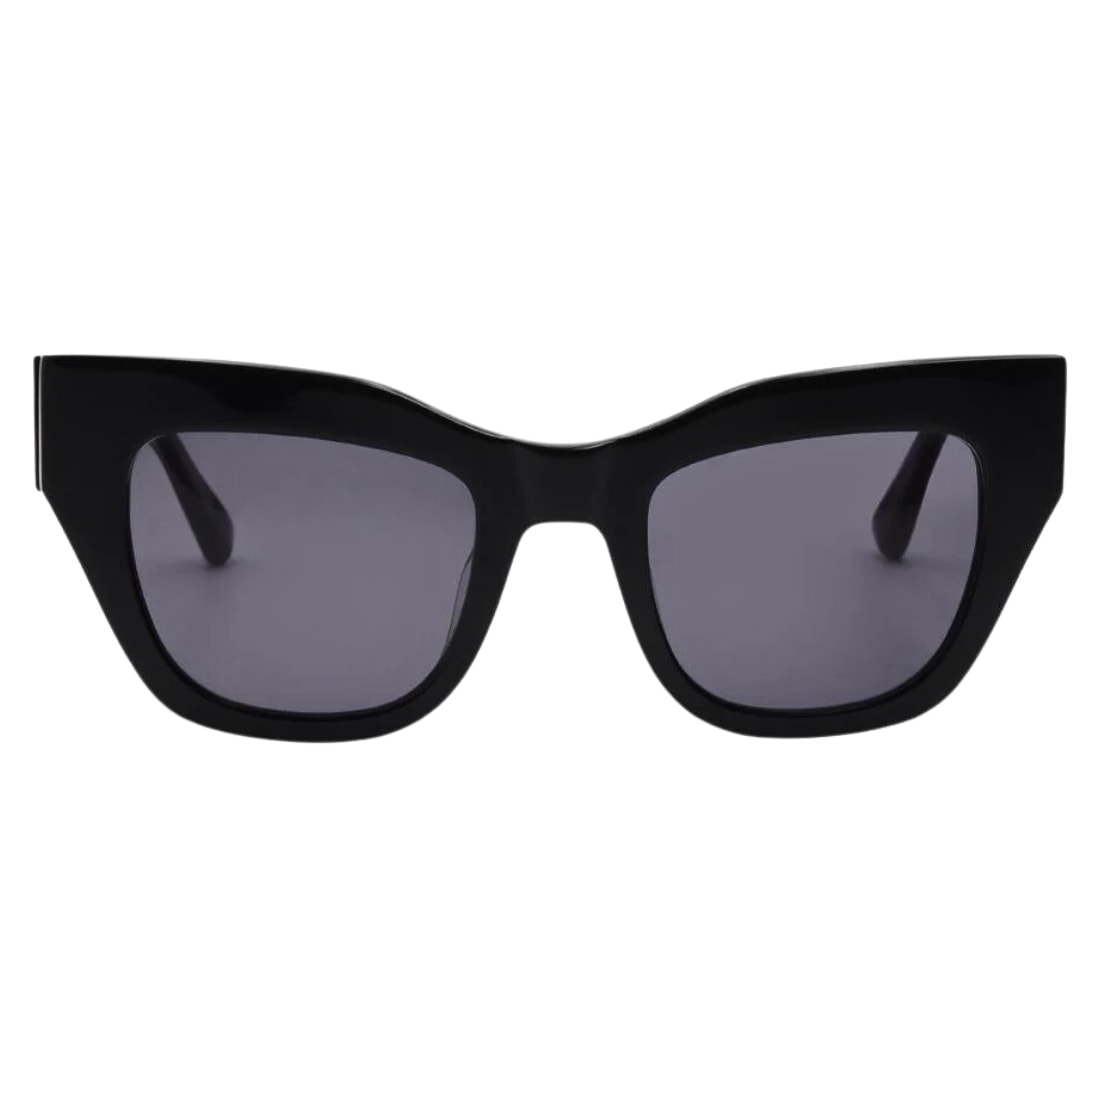 I-Sea Decker Cat Eye Polarised Sunglasses - Black/Smoke Polarized Lens - Cat Eye Sunglasses by I-Sea